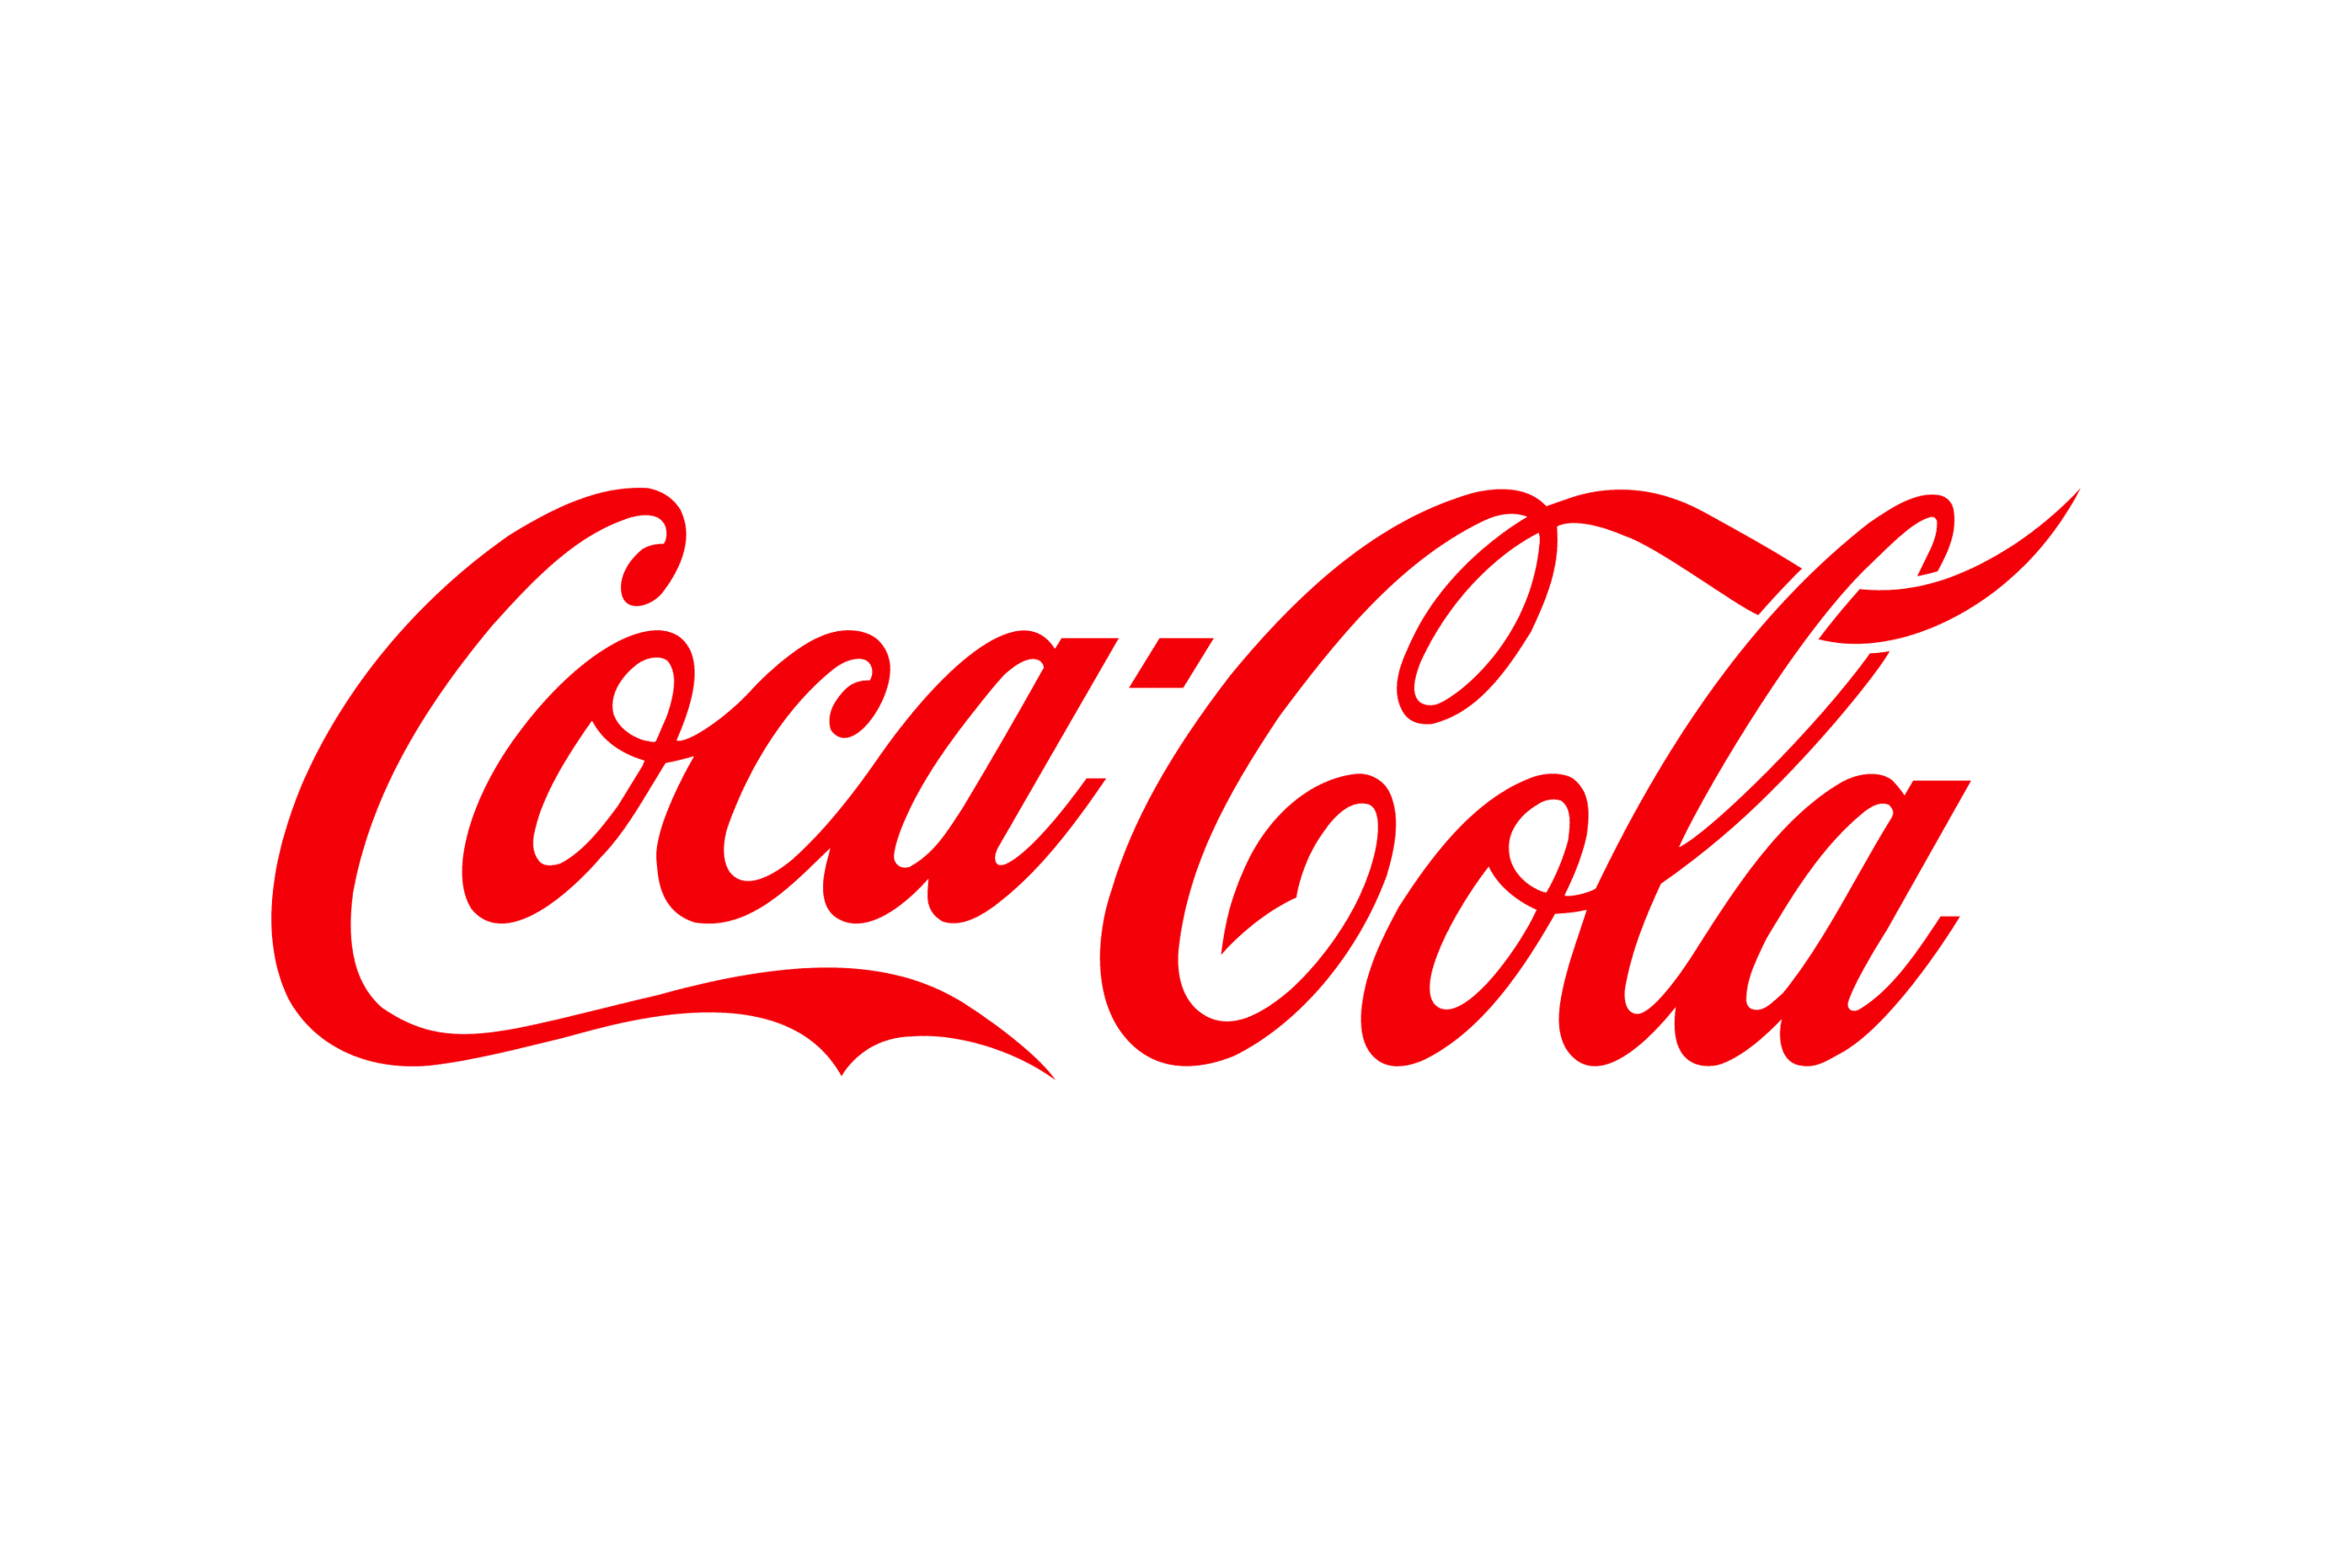 https://globalexecutive.uk/wp-content/uploads/2021/03/Coca-Cola-careers-Logo.png